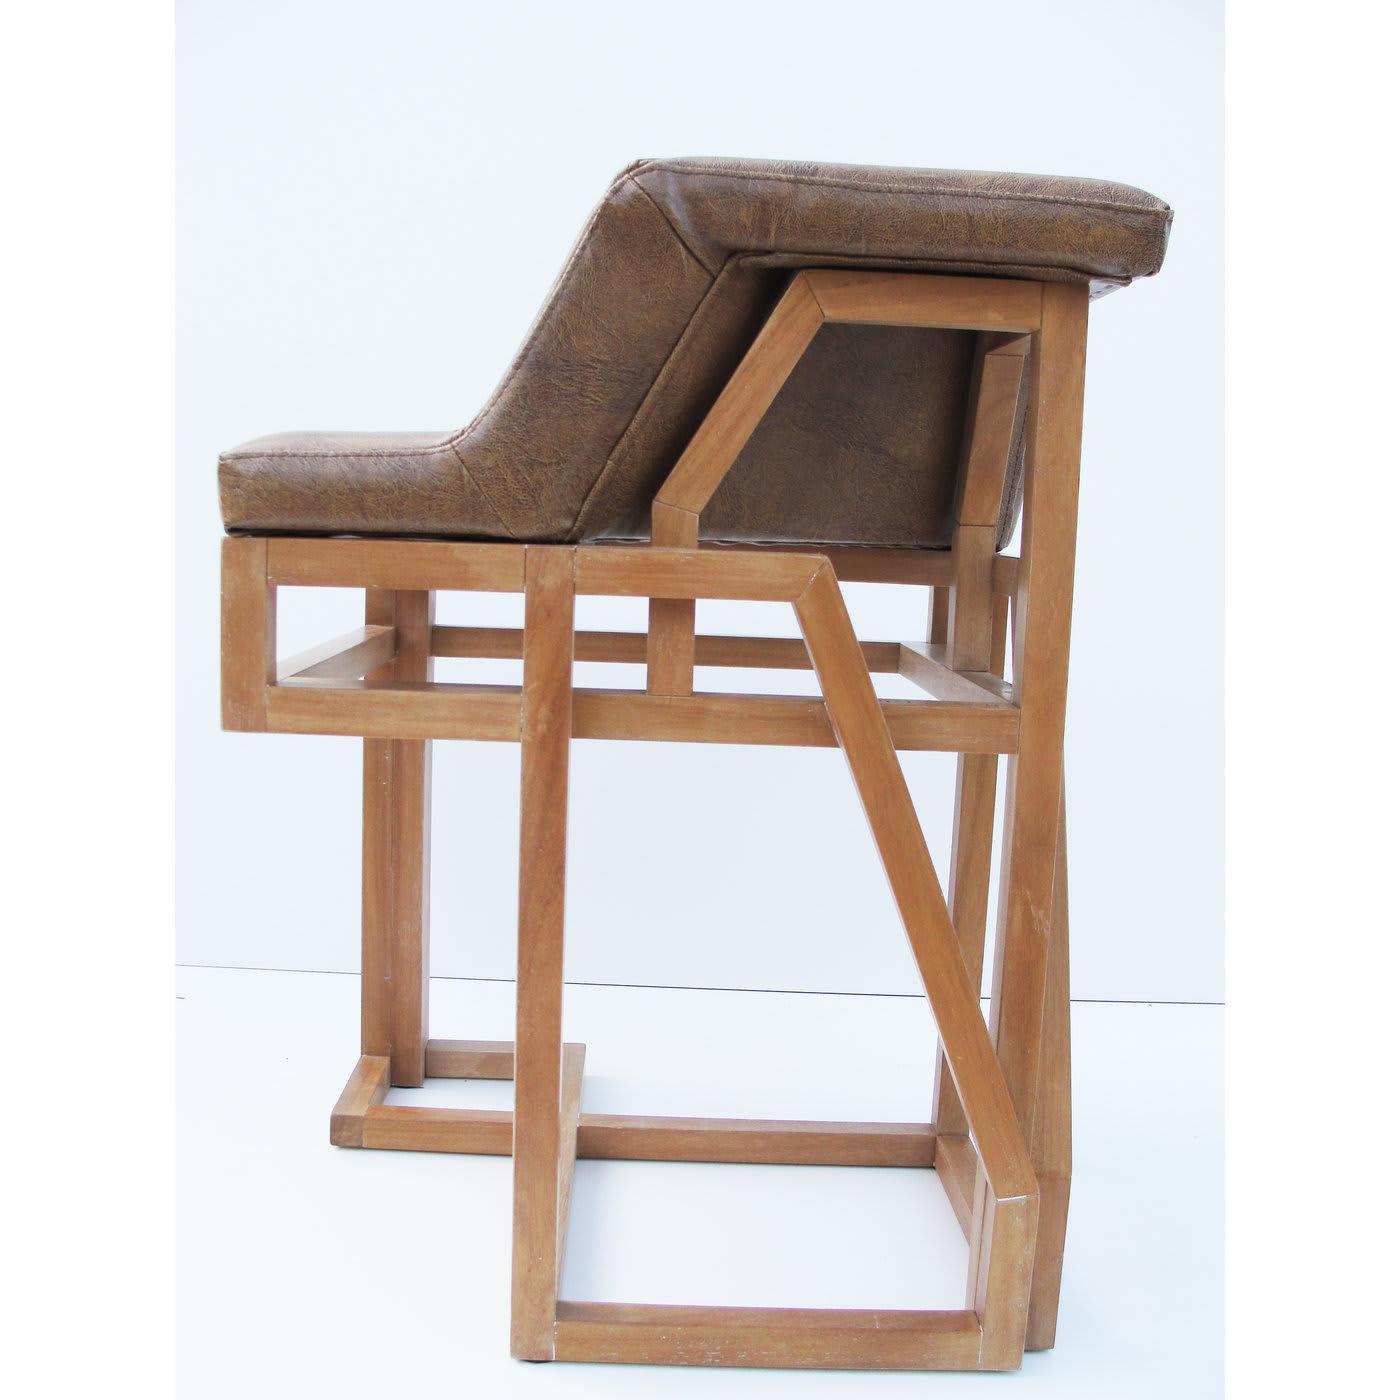 Mollis Brown stool - M.A.V. Style